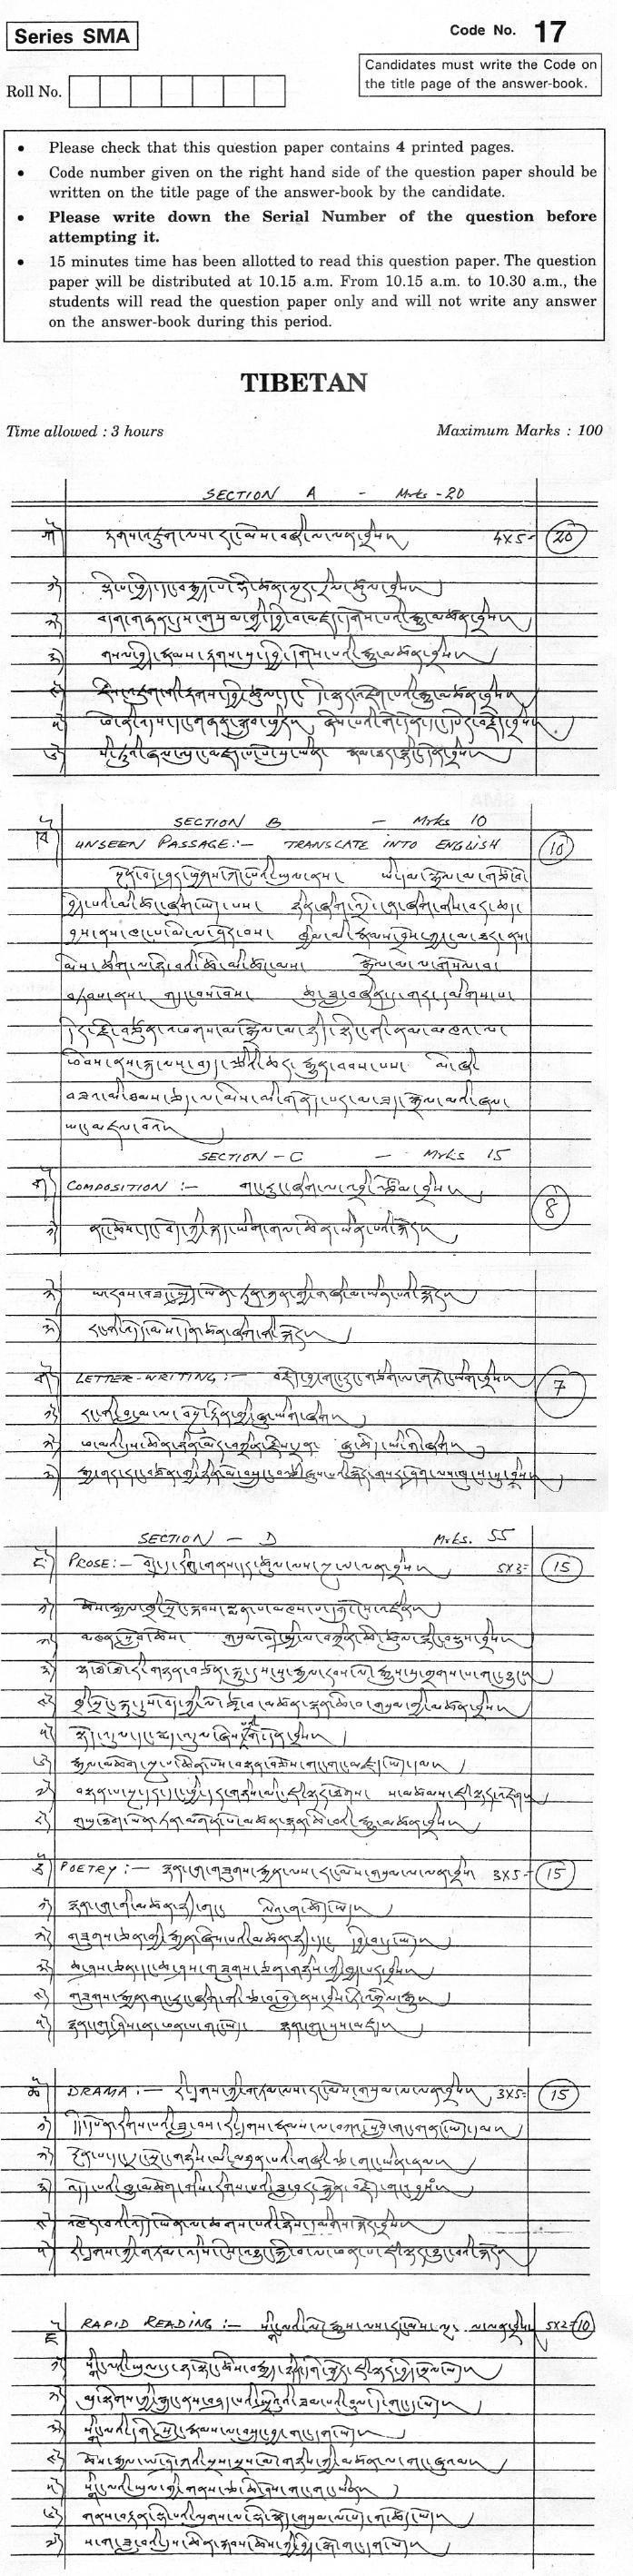 CBSE Class XII Previous Year Question Paper 2012 Tibetan